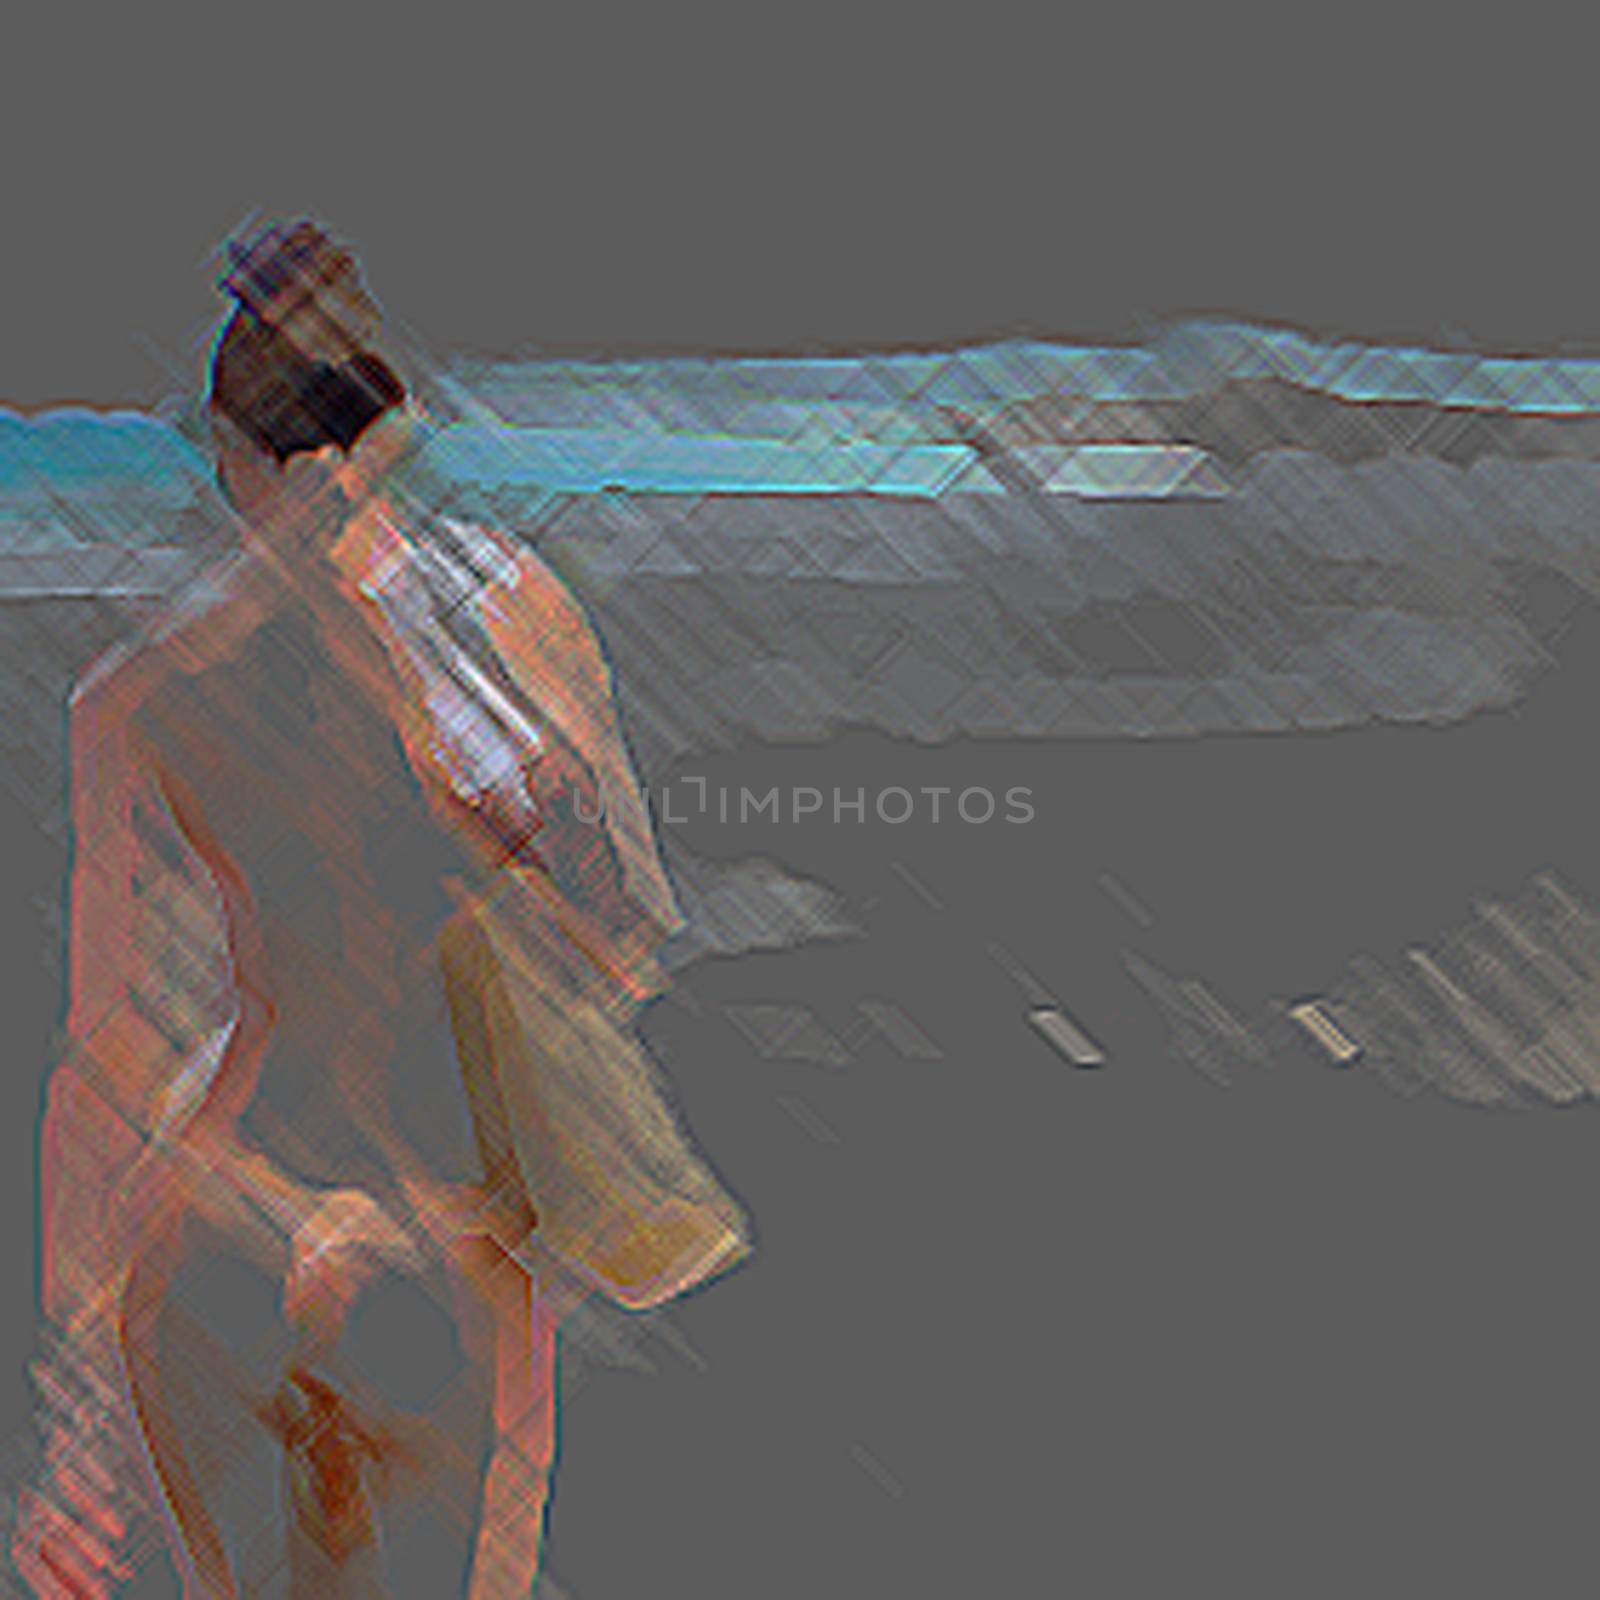 Digital impression of a topless woman model walking along a beach